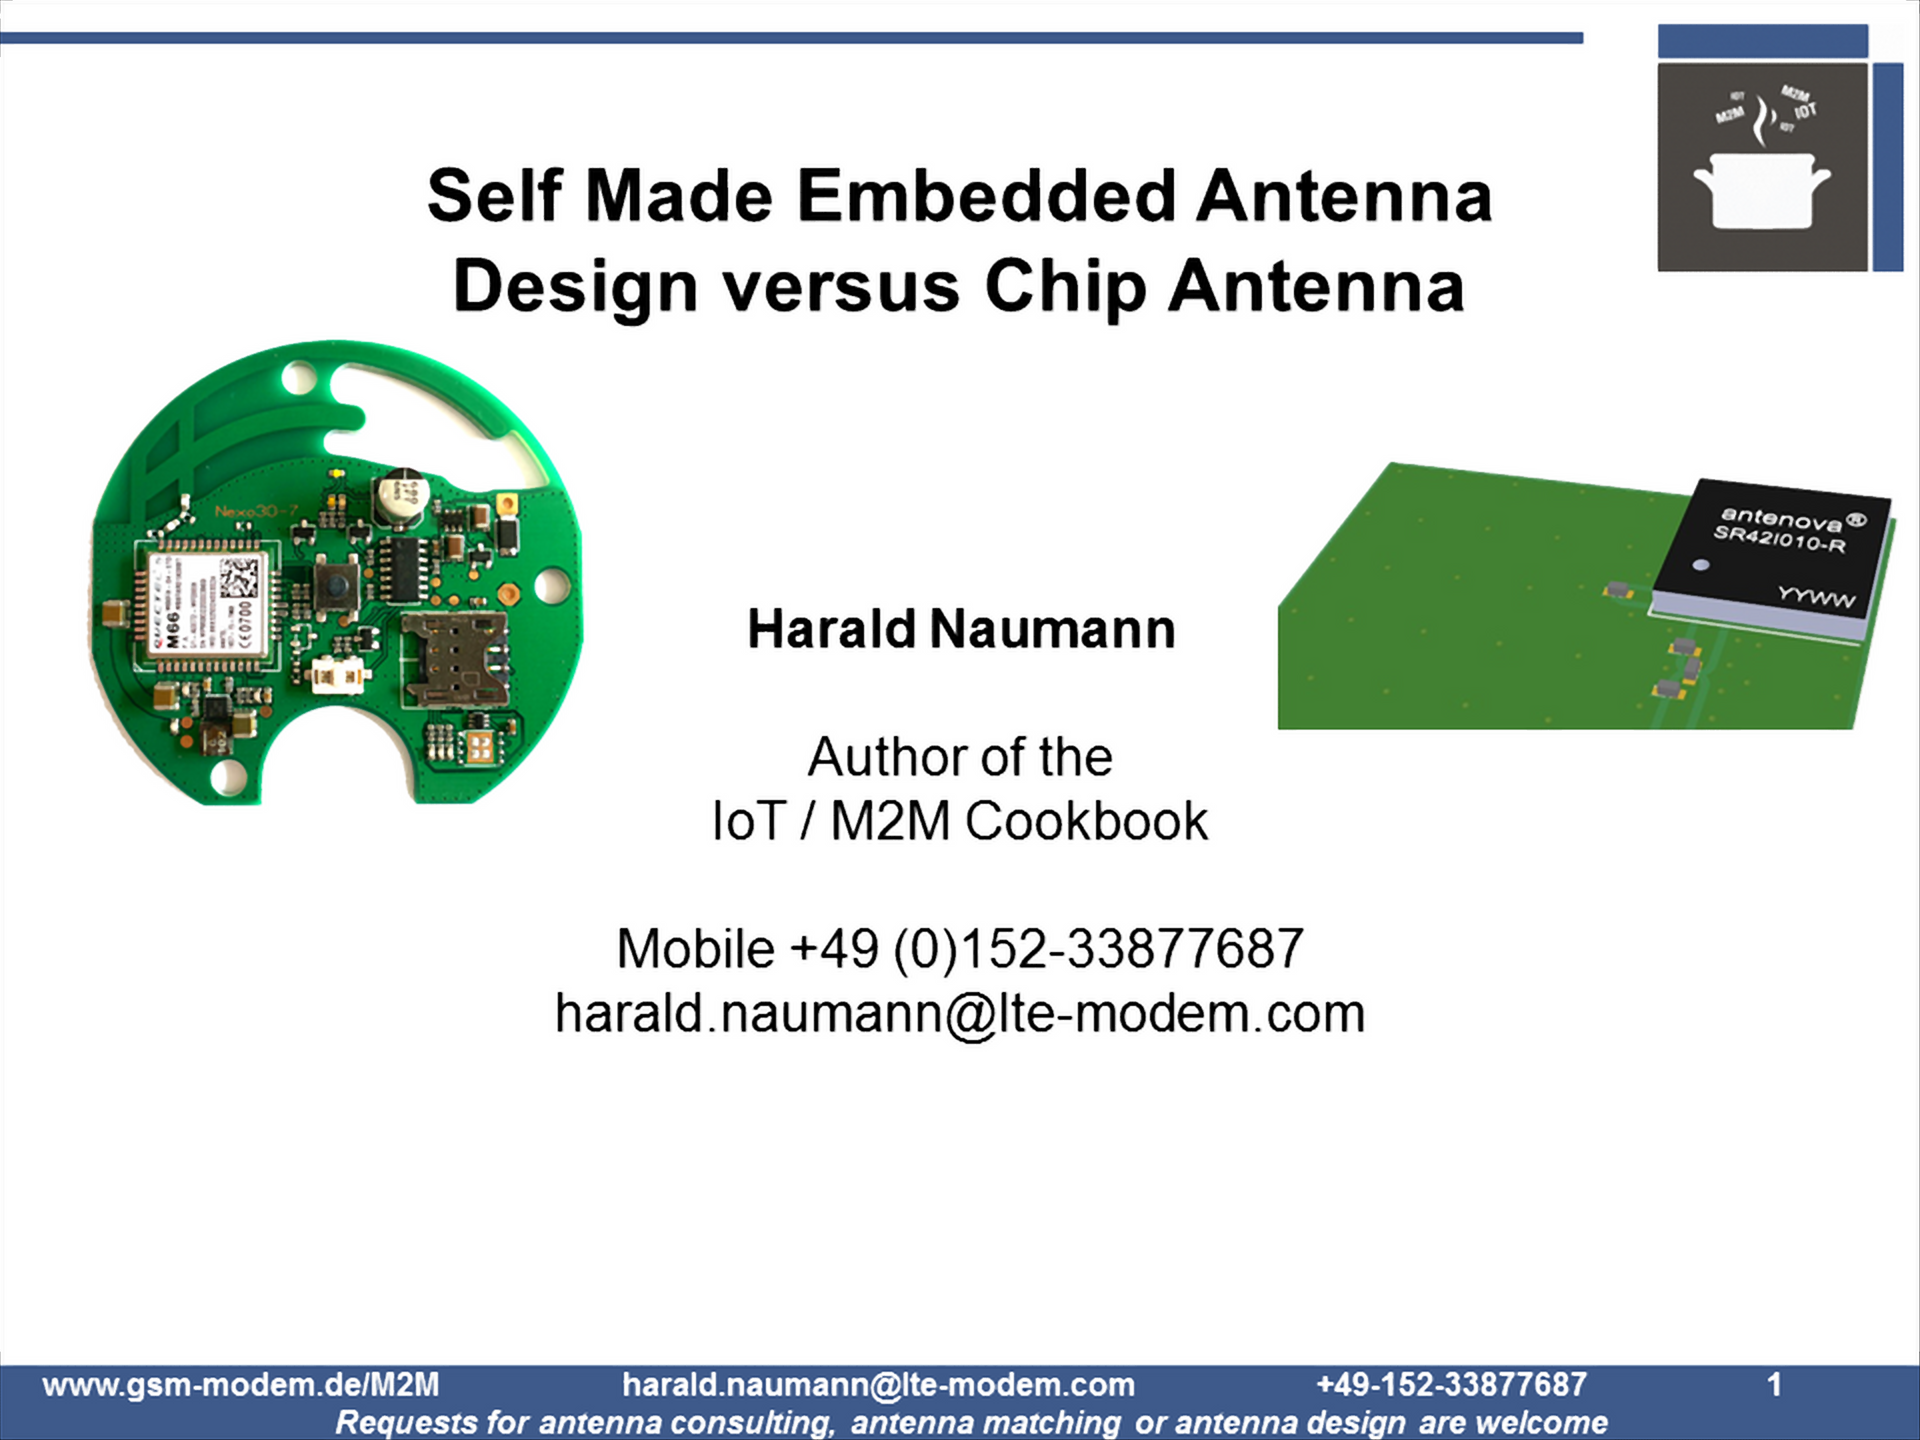 Self Made Embedded Antenna Designs versus Chip Antenna